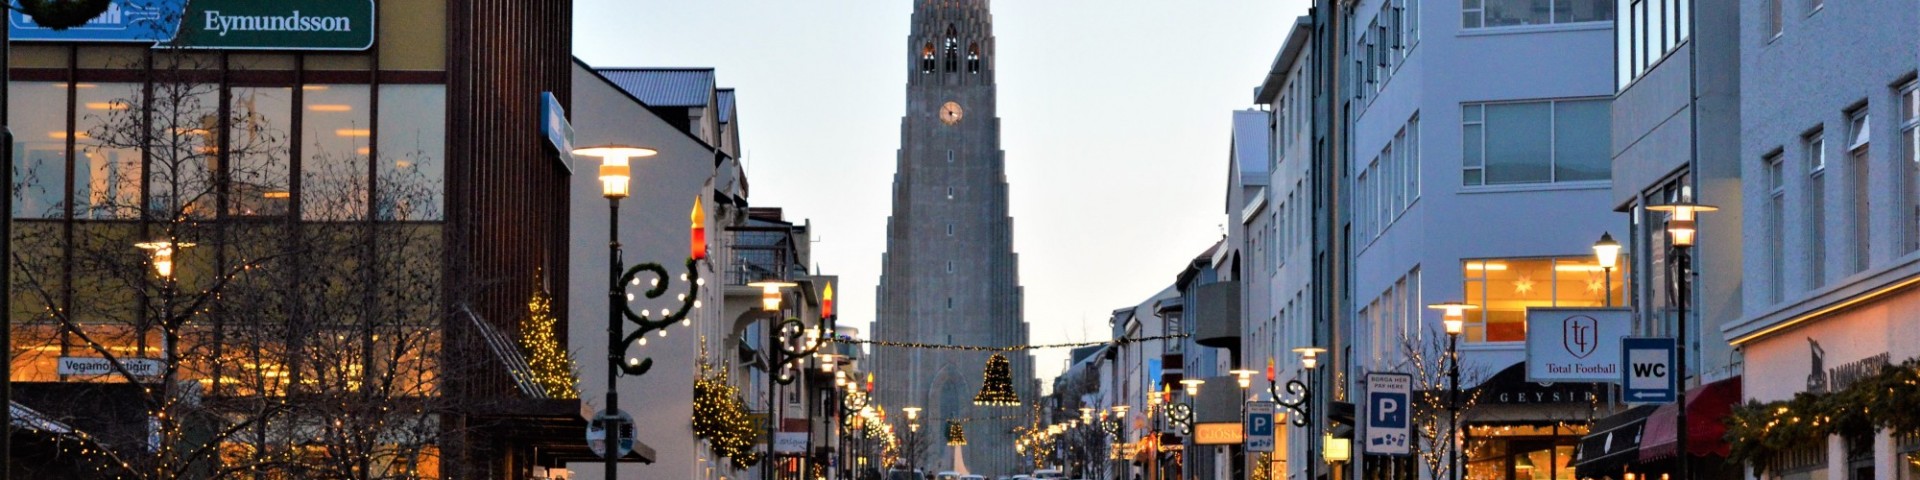 Christmas in Reykjavik